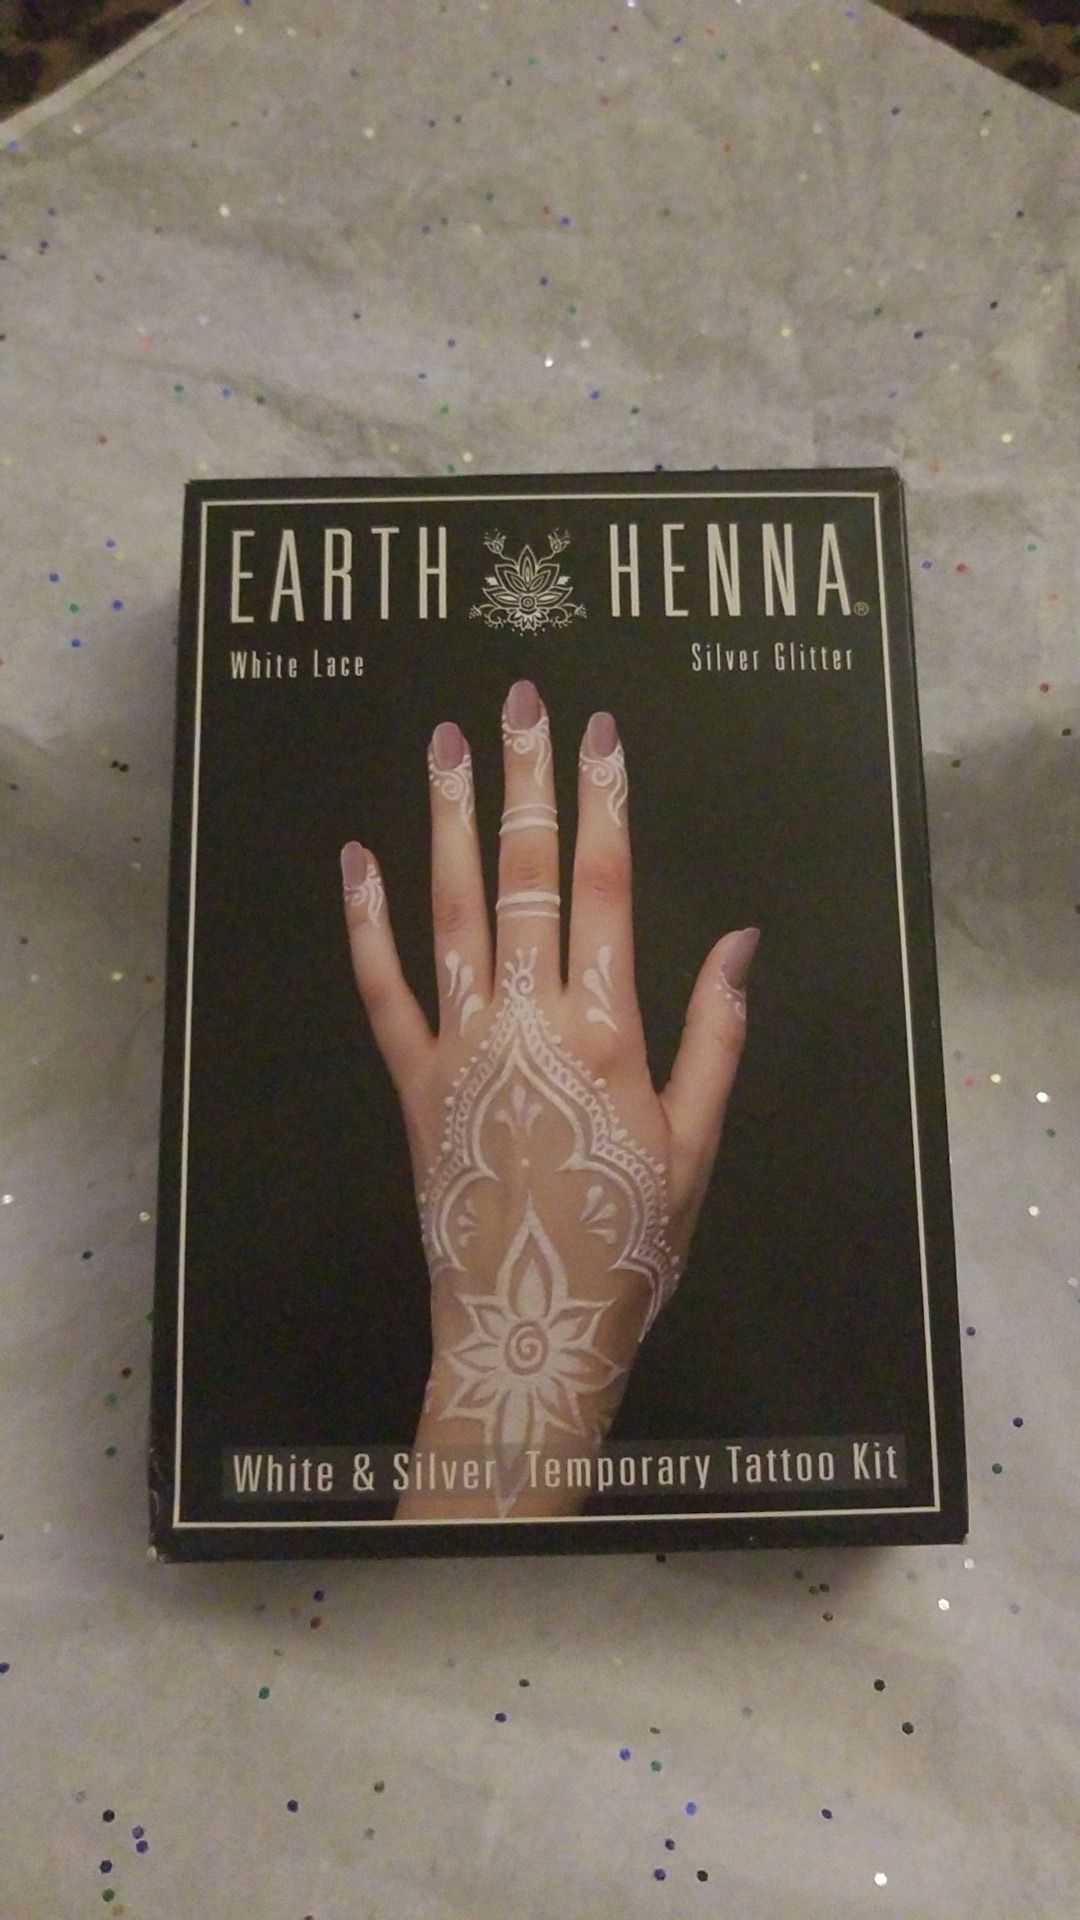 Earth henna kit silver